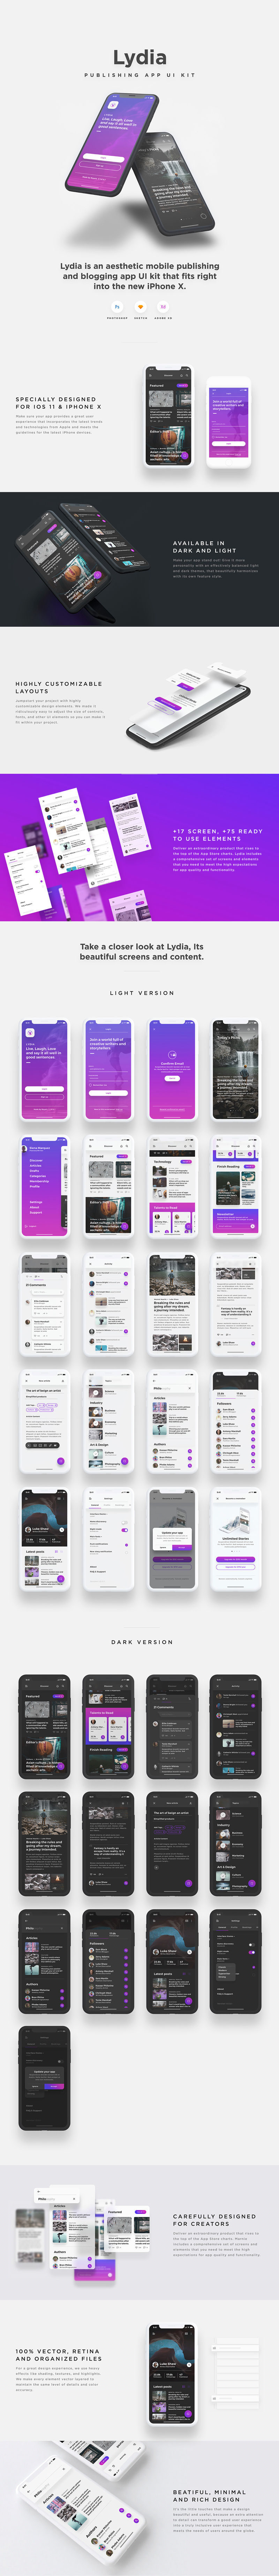 Lydia - Blogging Mobile App UI Kit - Adobe XD UI Kit Sample